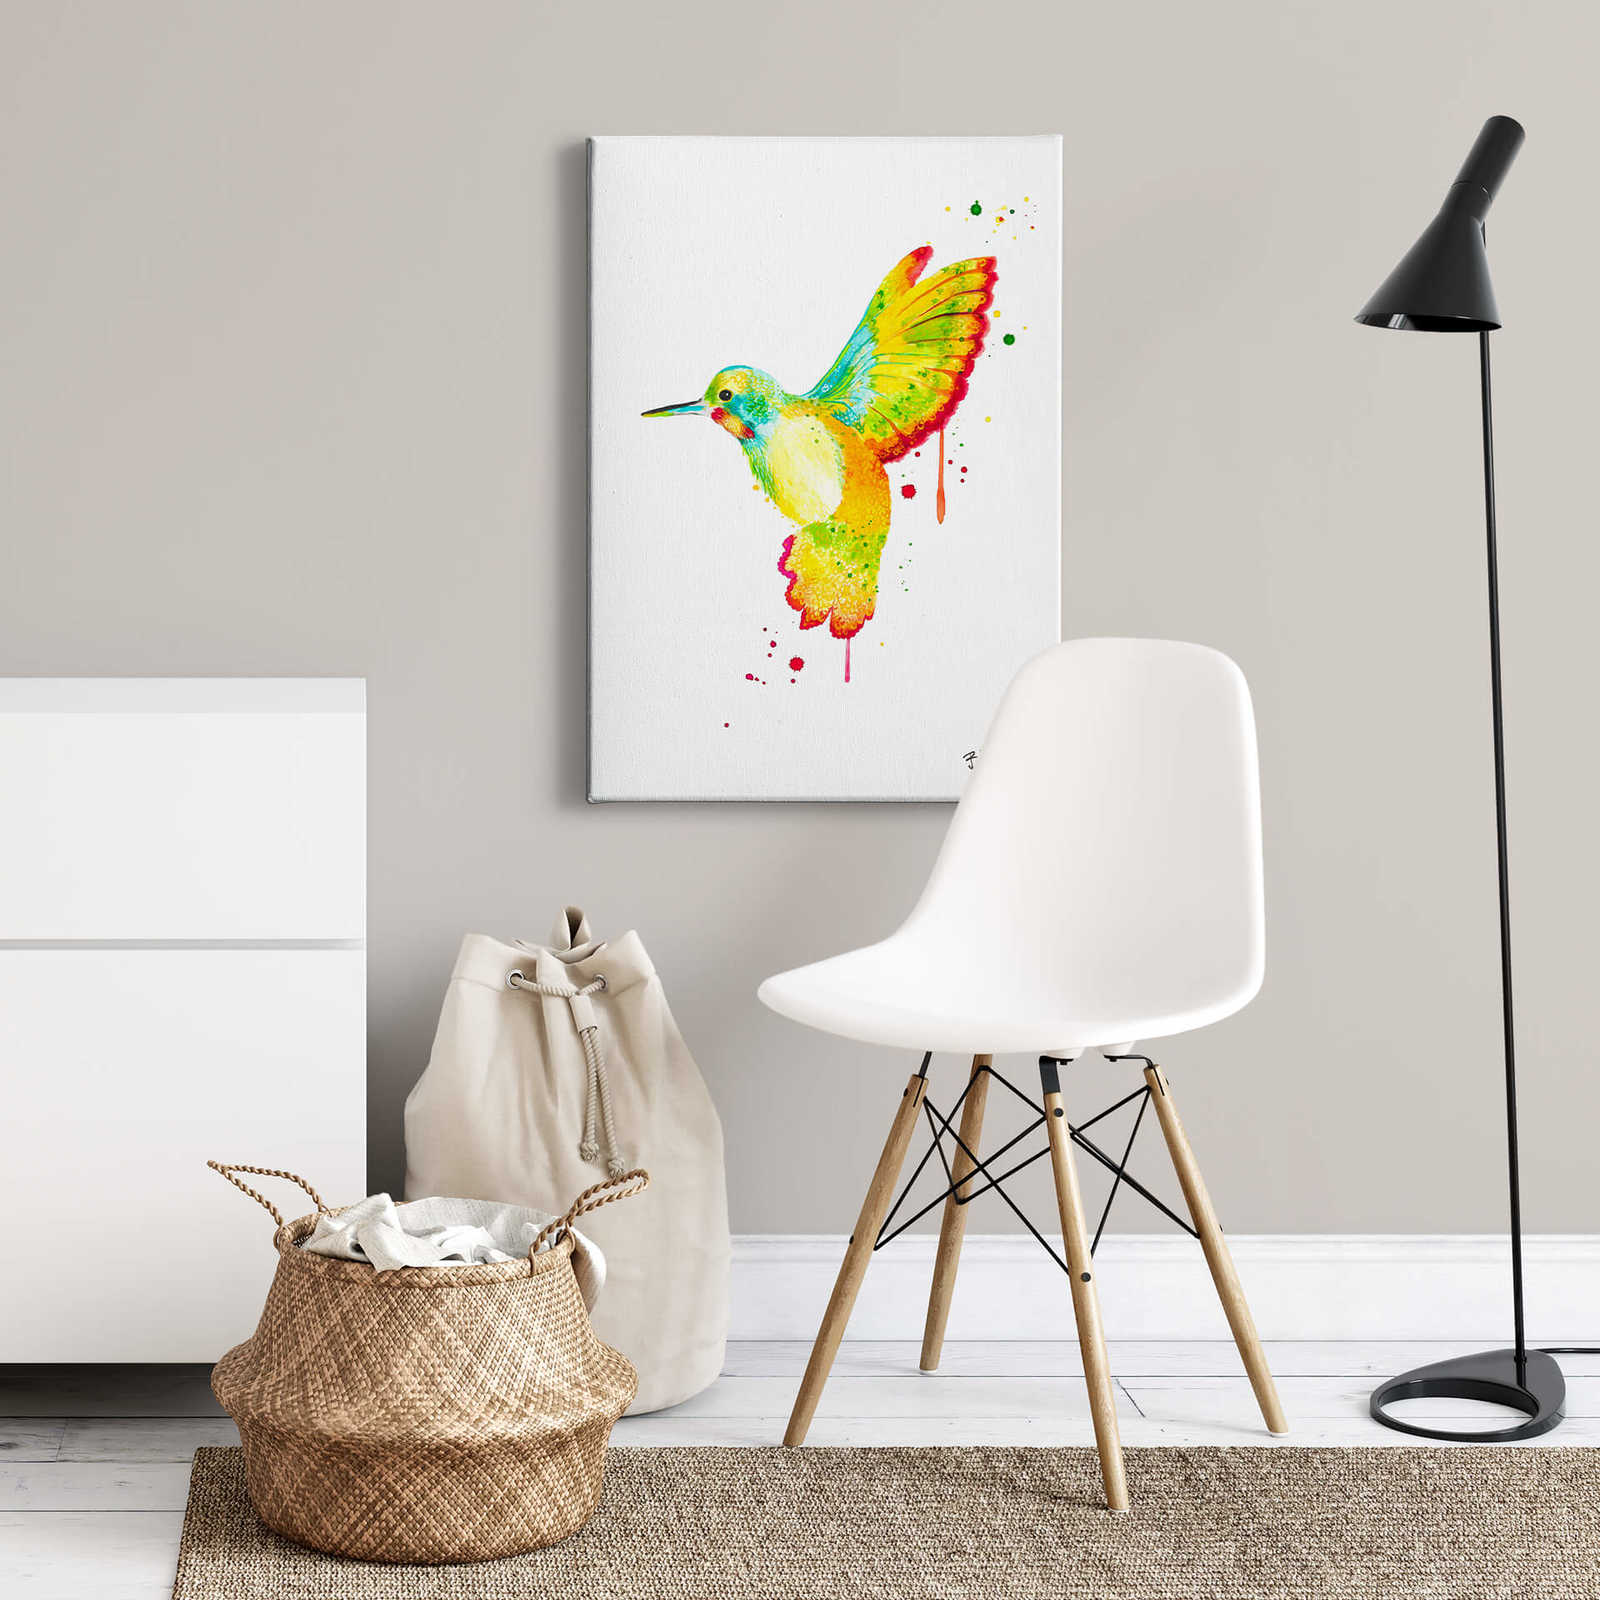             Humingbird by Buttafly, impresión en lienzo con colibrí de colores - 0,50 m x 0,70 m
        